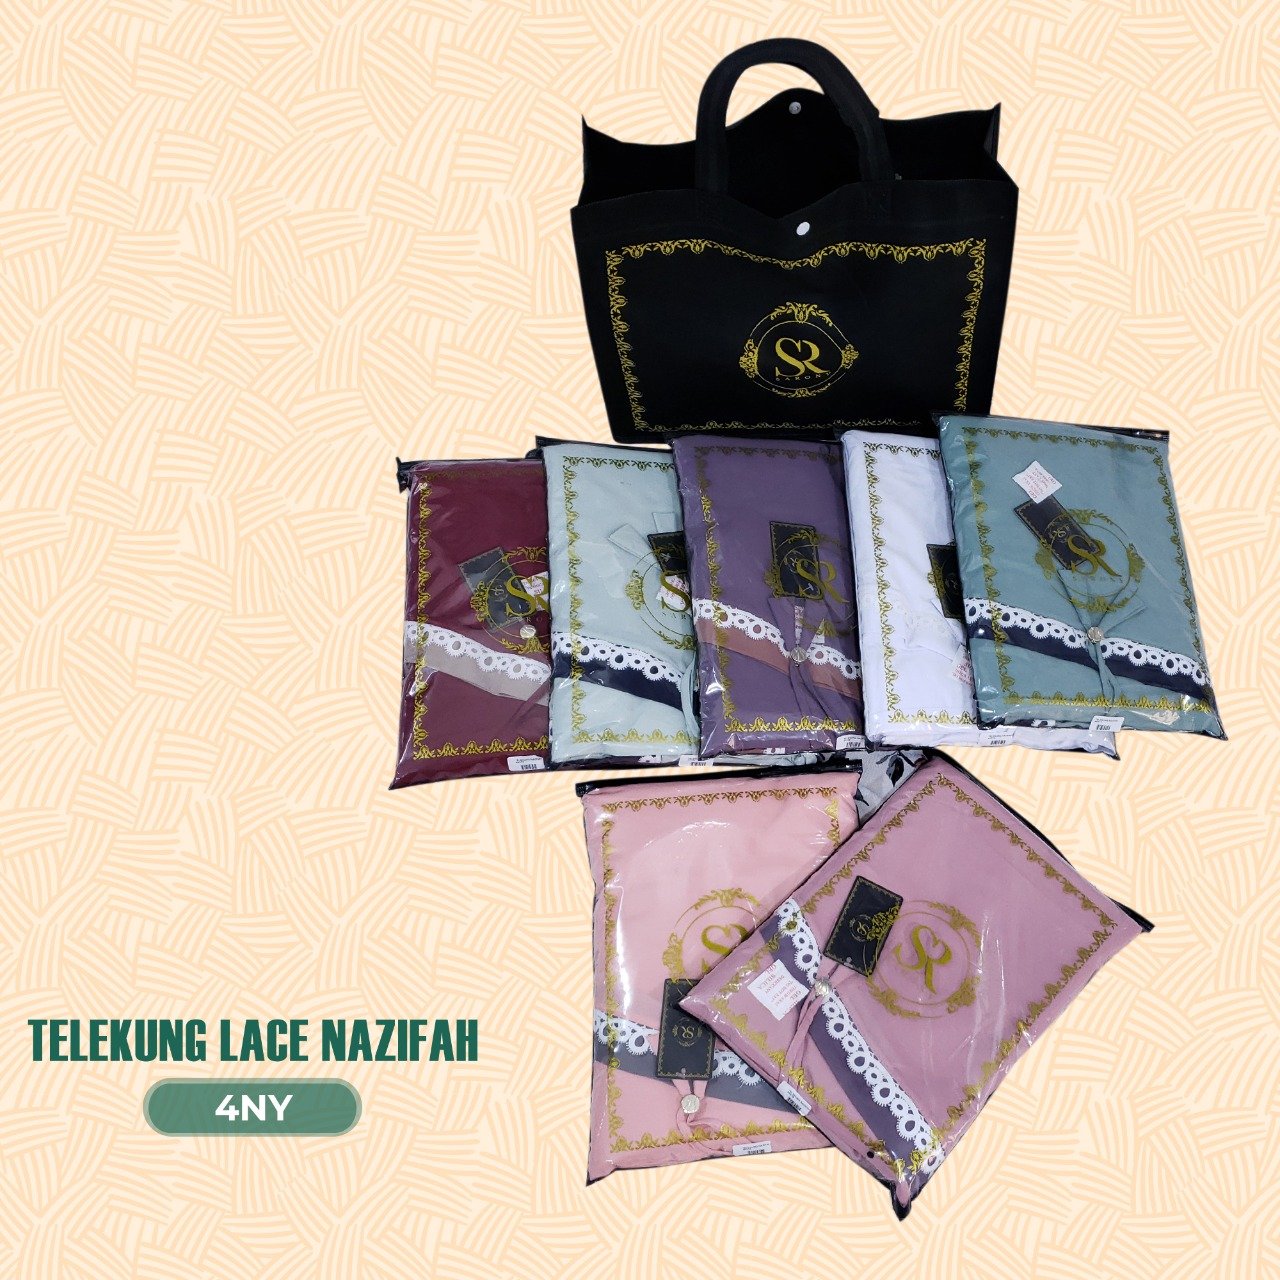 SARONY Telekung Lace Nazifah Collection RM29